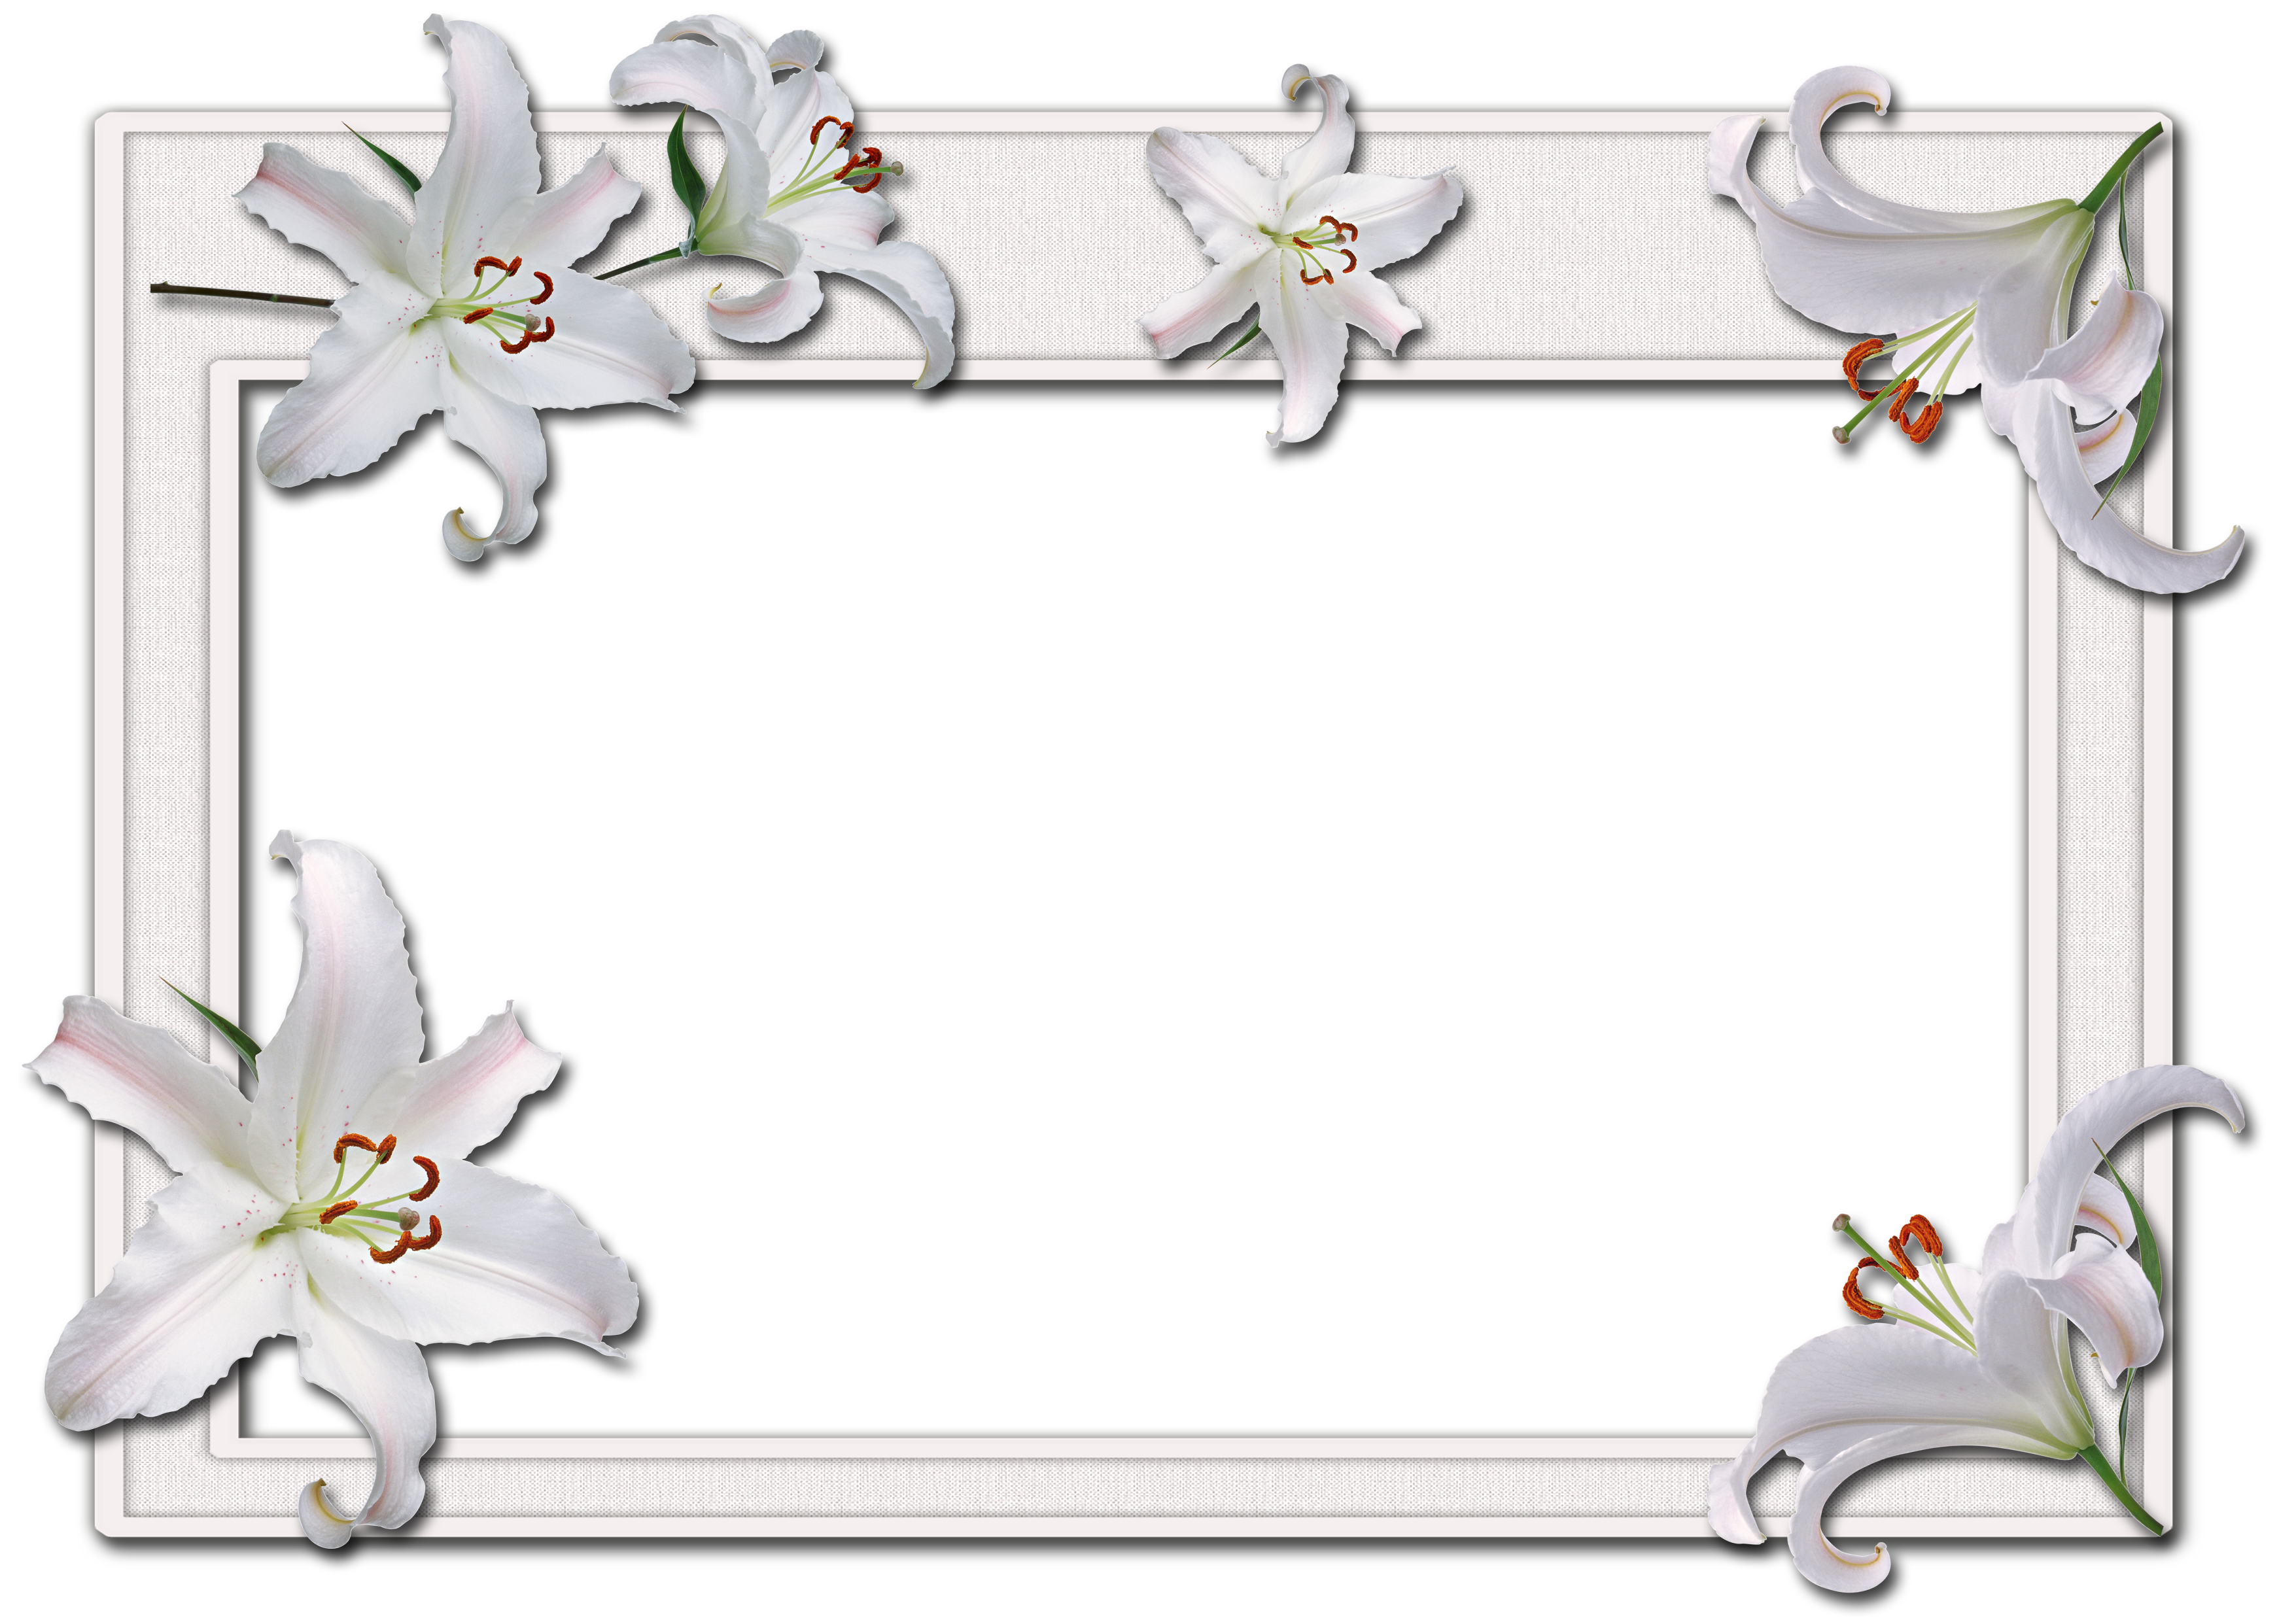 Flowers frame (10)